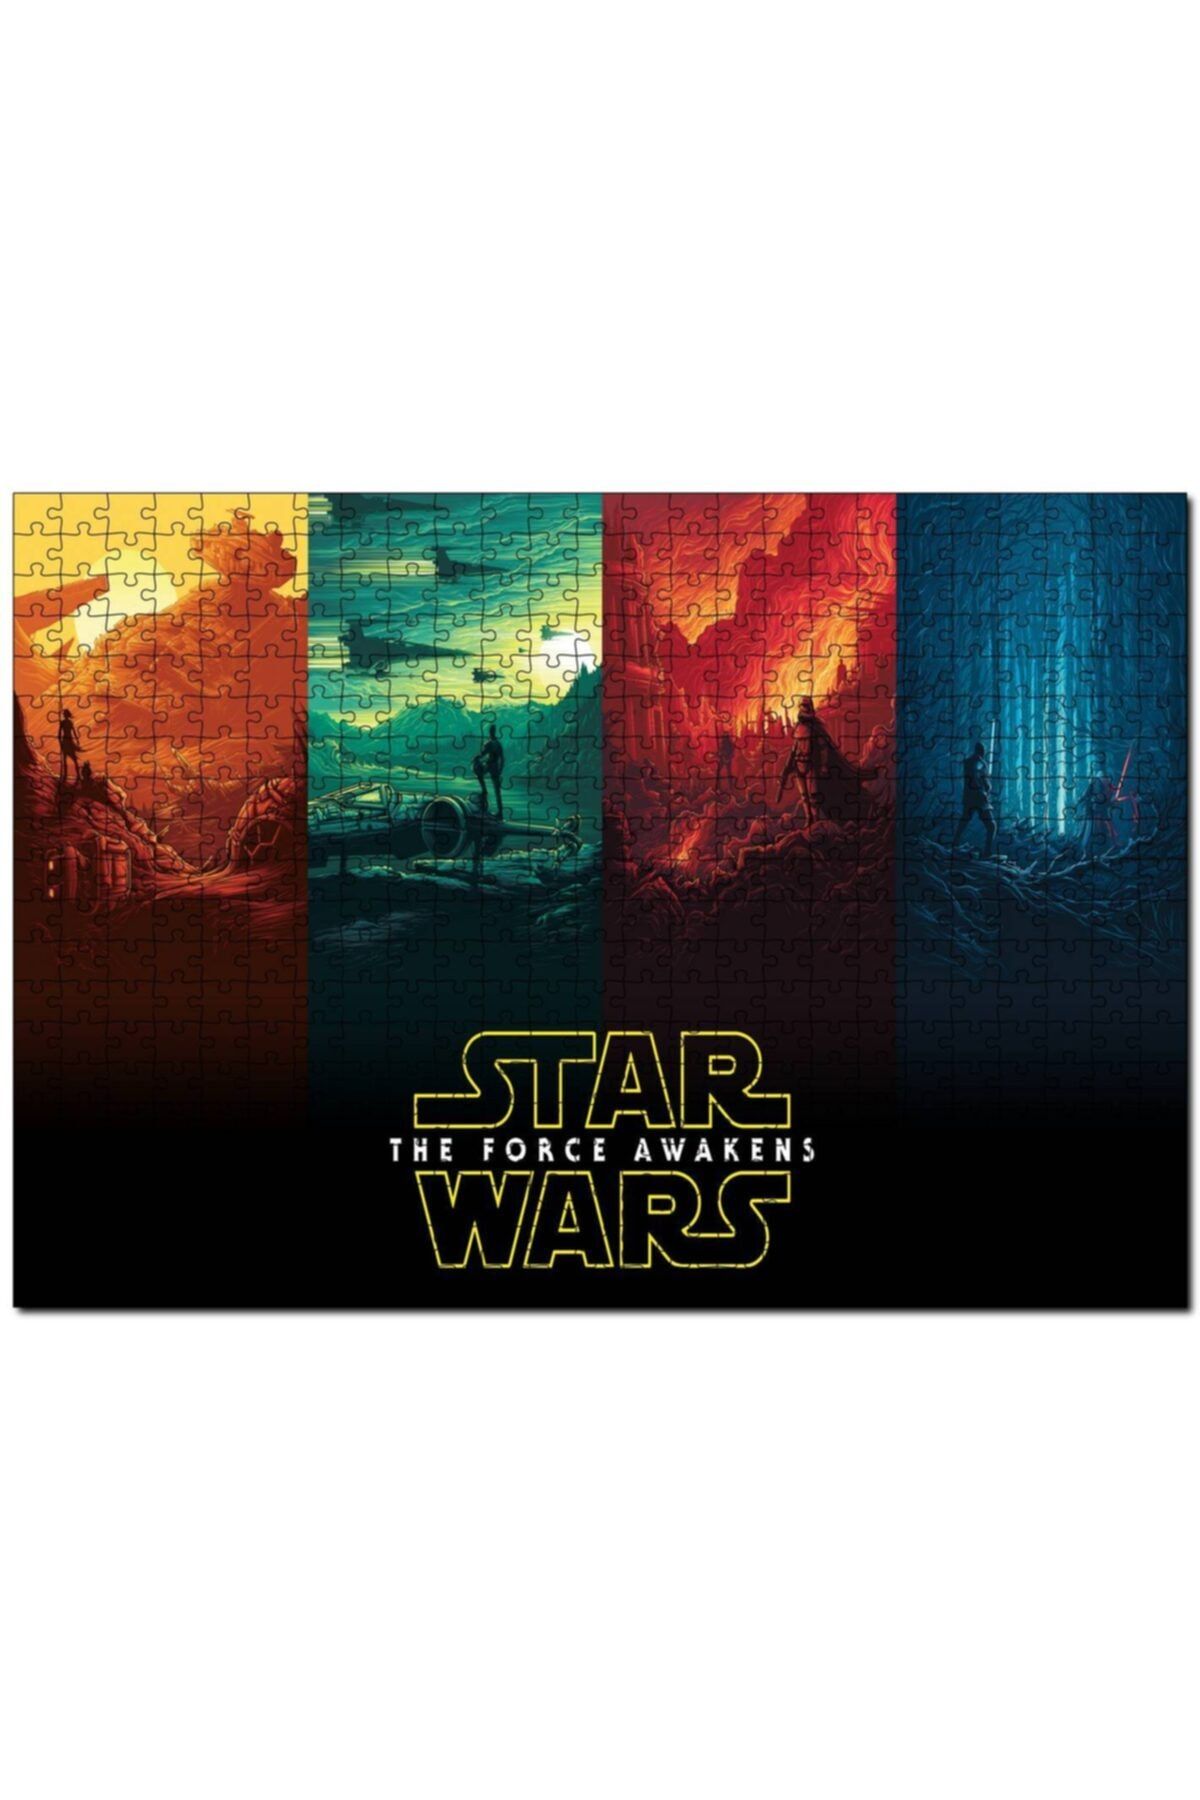 Cakapuzzle Star Wars Rey Finn Kylo Ren Han Solo Luke Skywalker 255 Parça Puzzle Yapboz Mdf